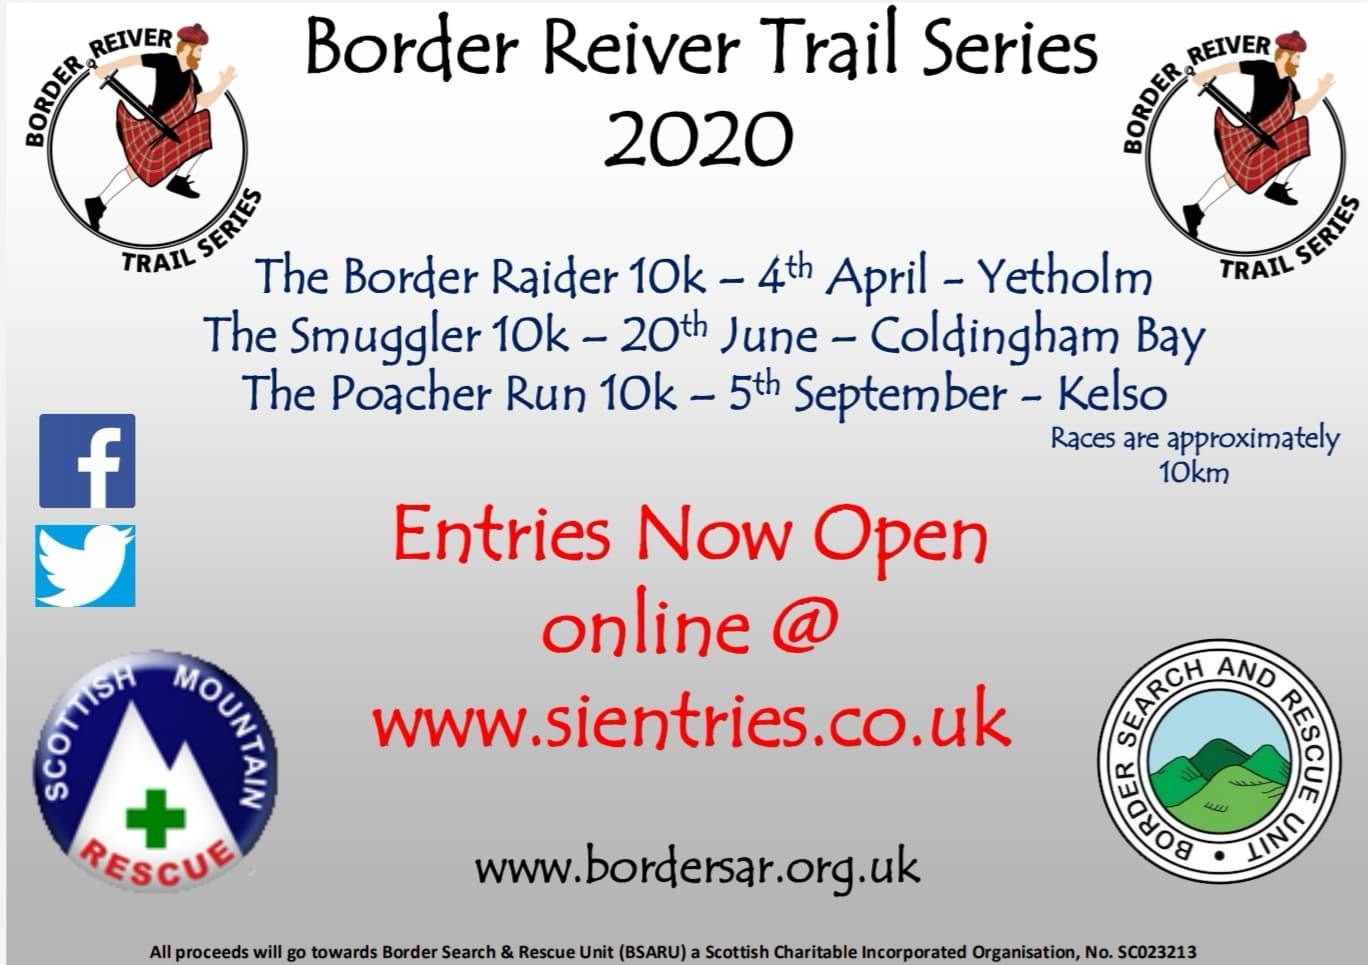 Border Reiver Trail Series 2020 Online Entries